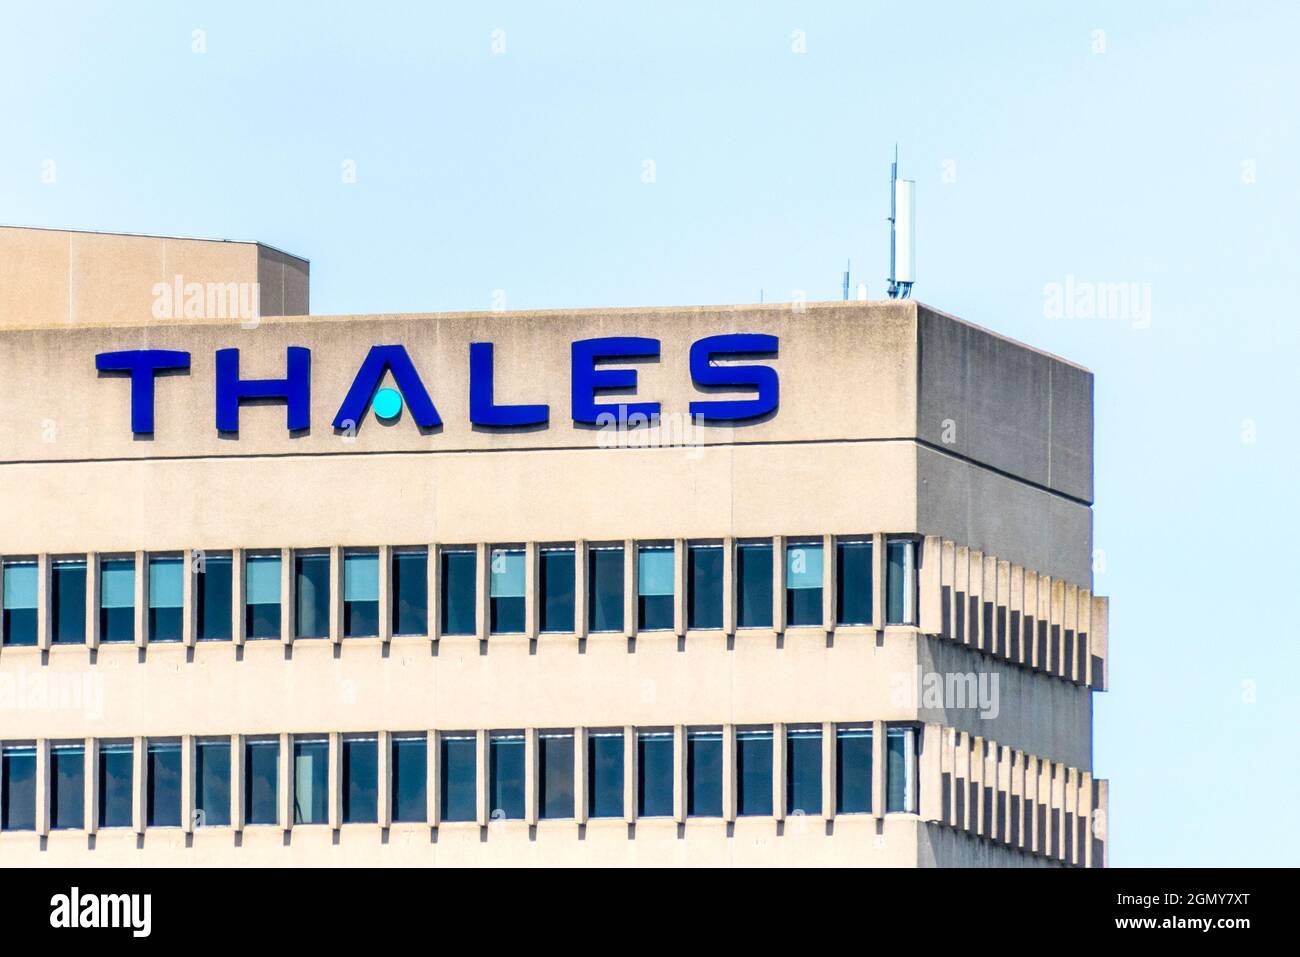 Thales acquires Gemalto in huge digital security deal - SecureIDNews